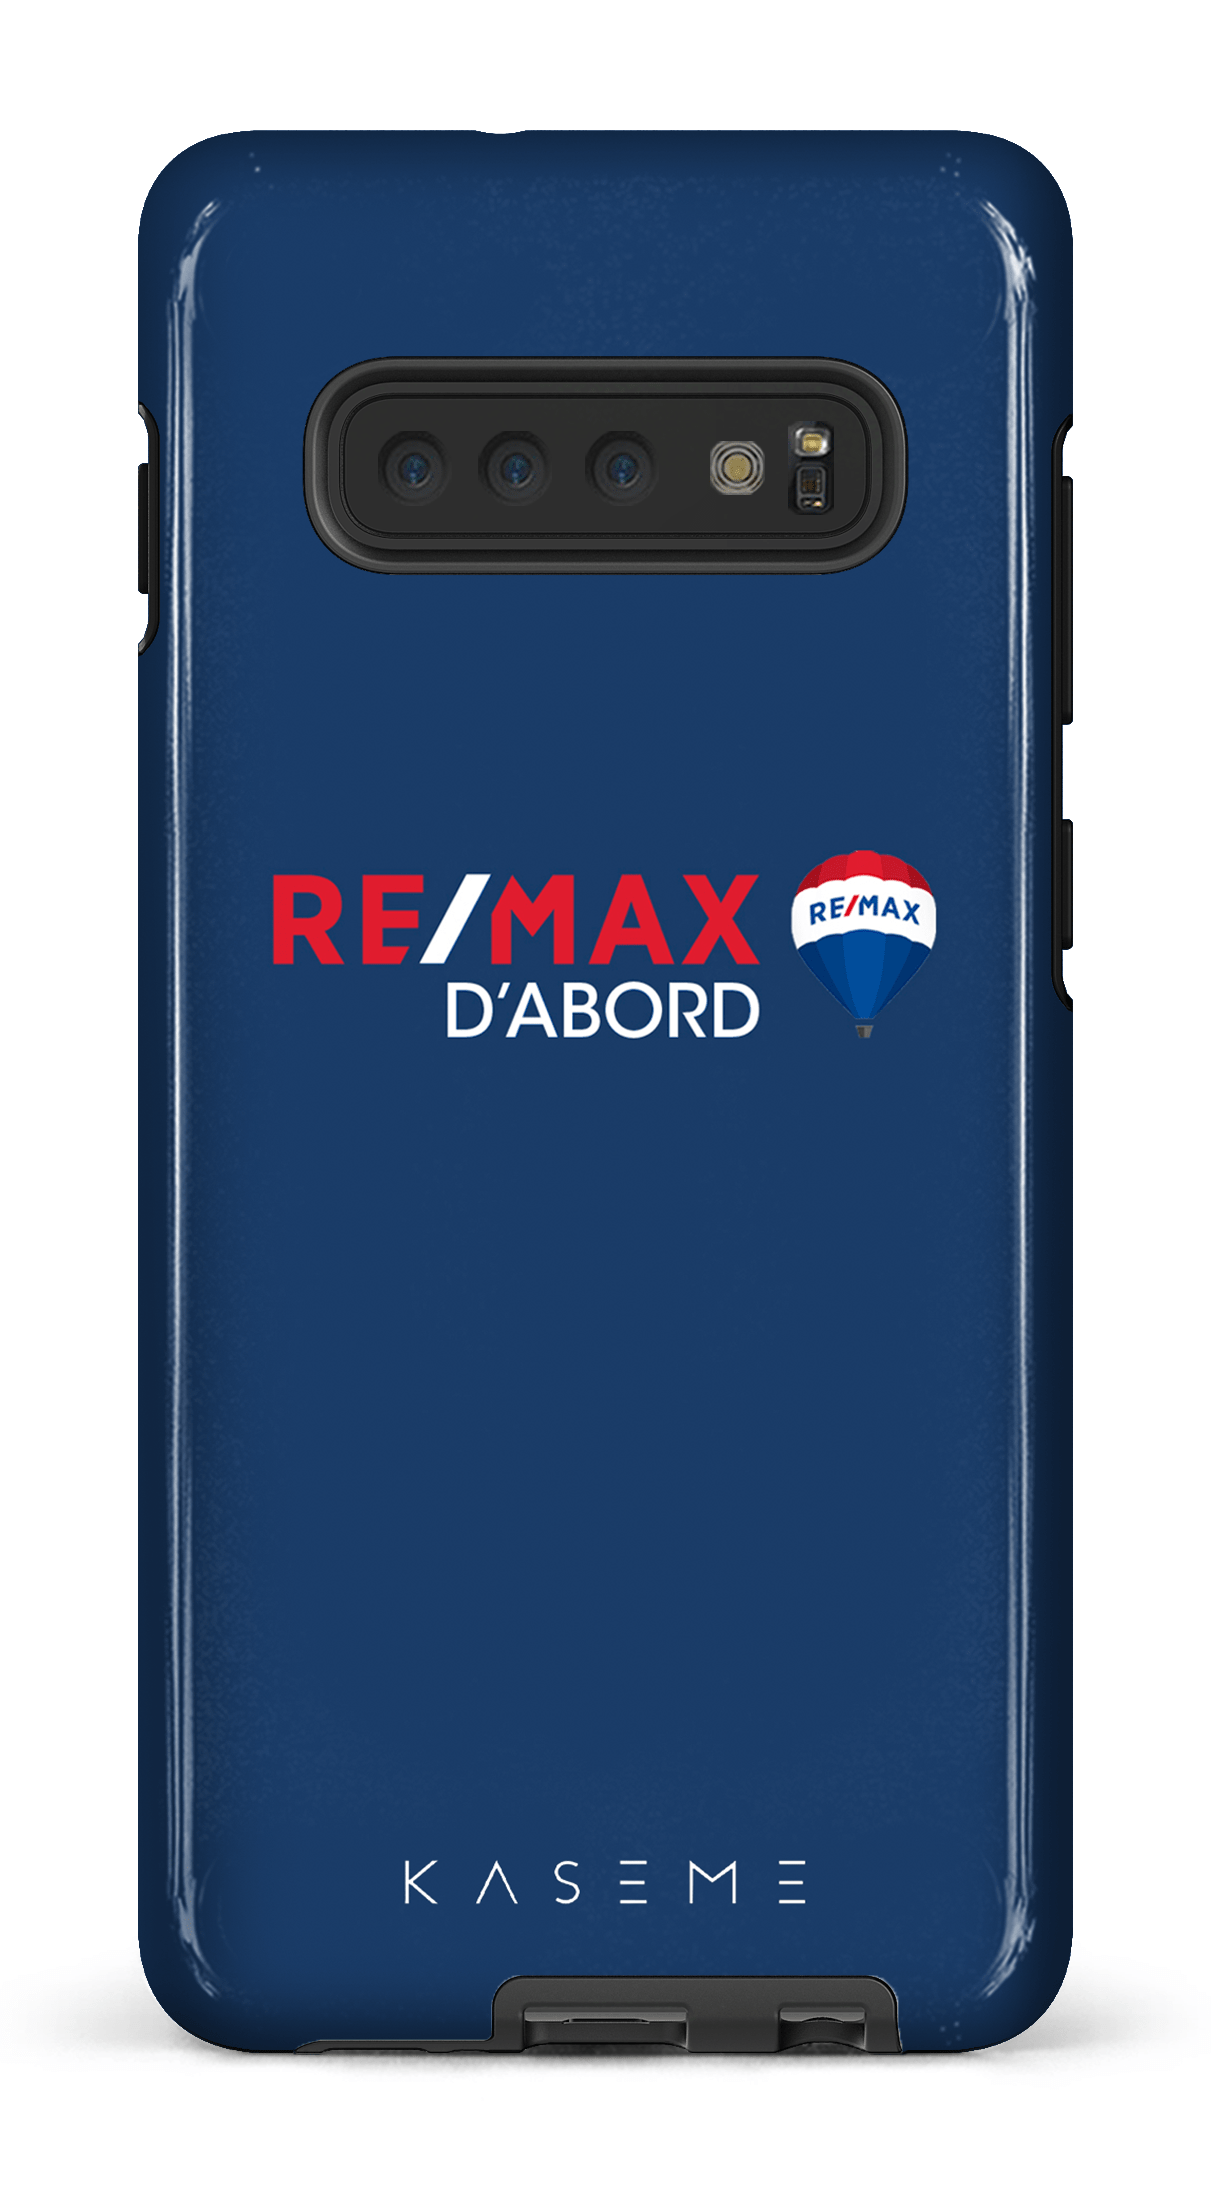 Remax D'abord Bleu - Galaxy S10 Plus